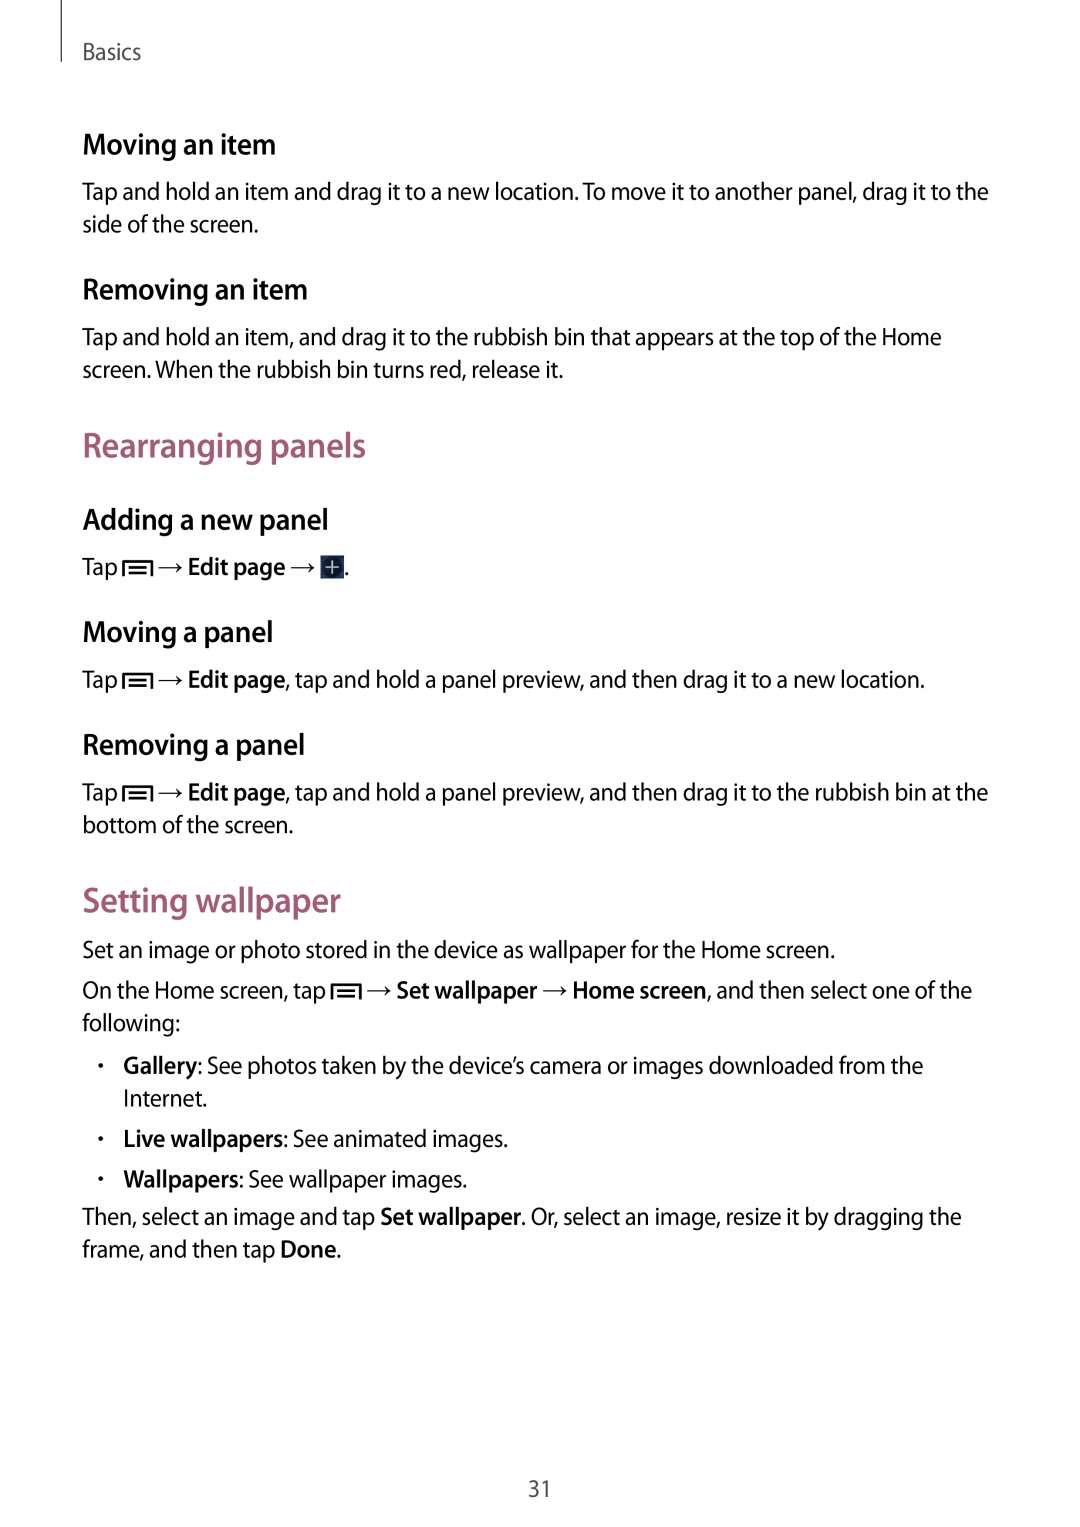 Samsung GT-I8730ZWACYV Rearranging panels, Setting wallpaper, Moving an item, Removing an item, Adding a new panel, Basics 